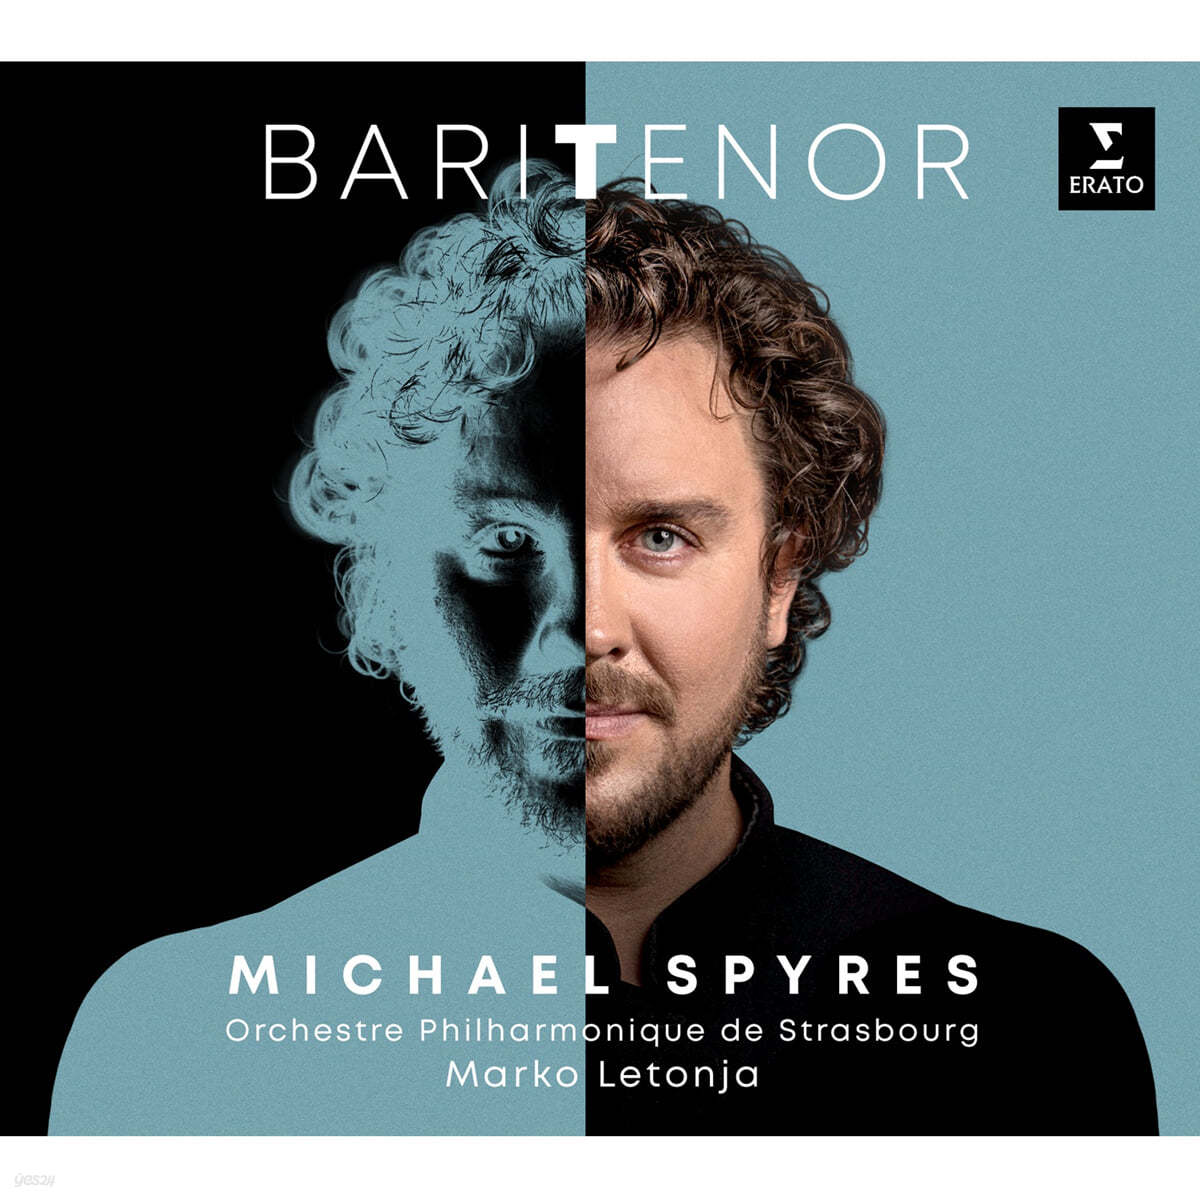 Michael Spyres  바리테너 - 마이클 스파이어스가 부르는 오페라 아리아 (BariTenor) 